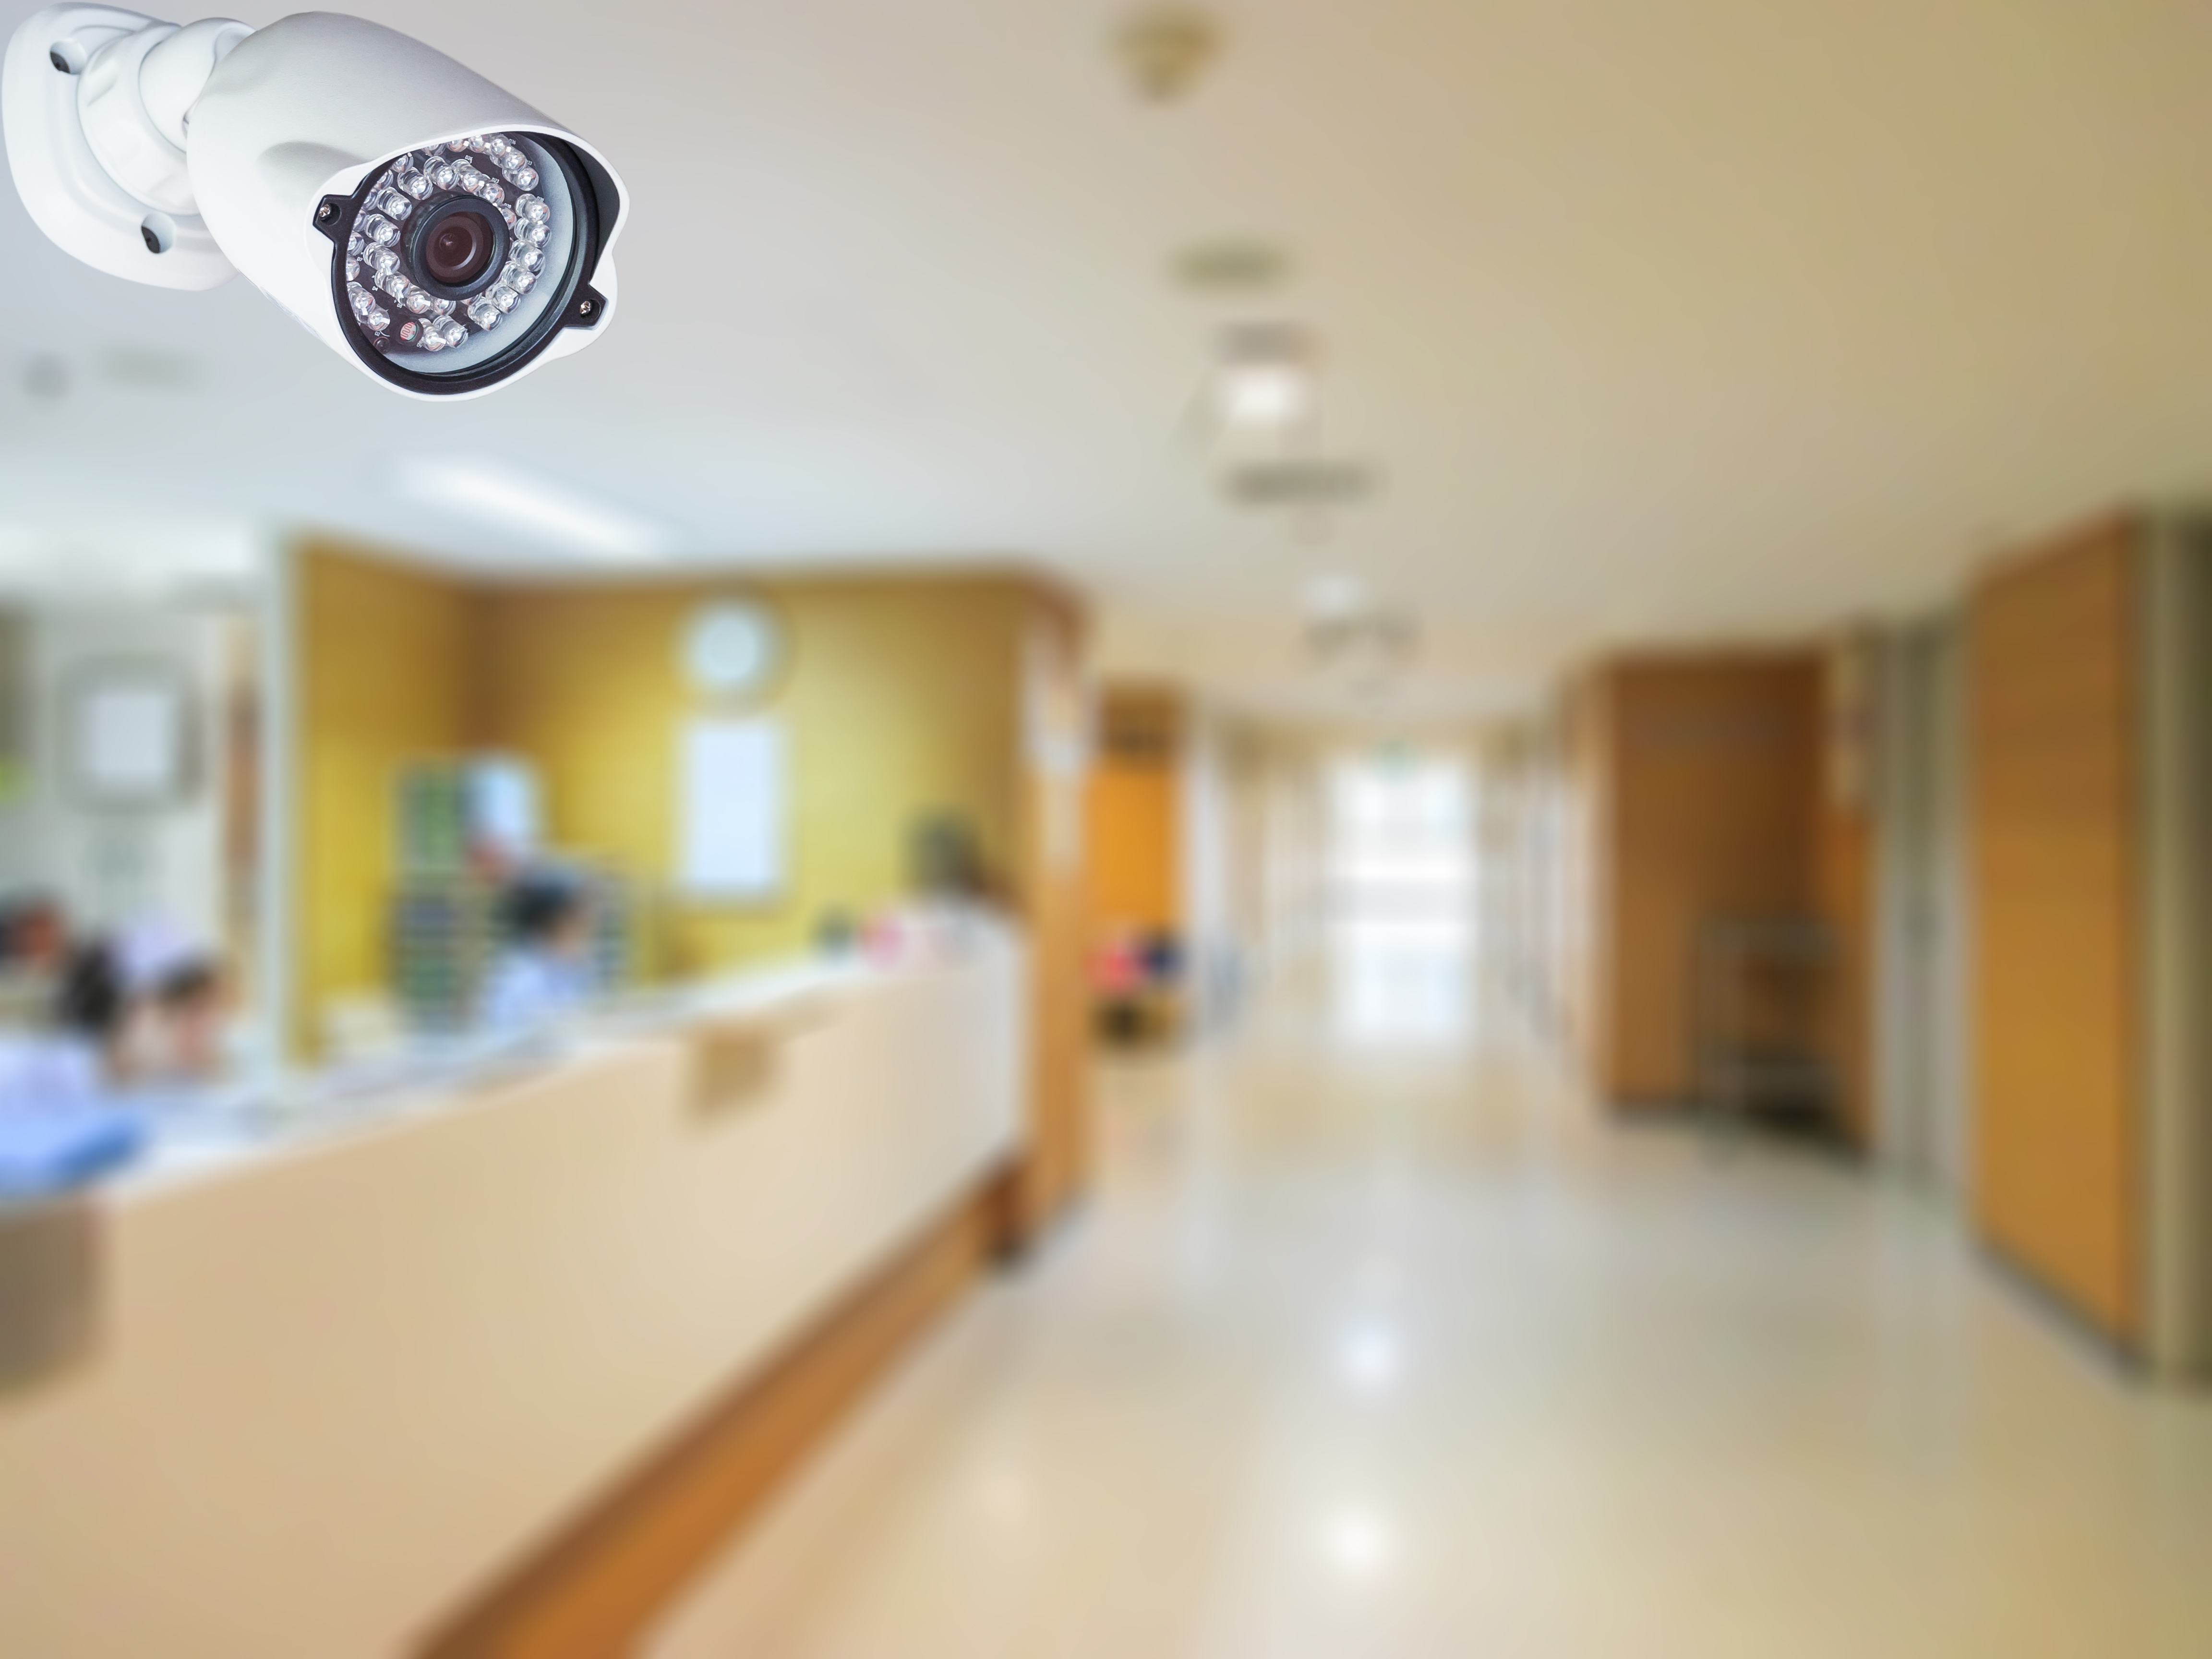 Hospital CCTV Video Surveillance